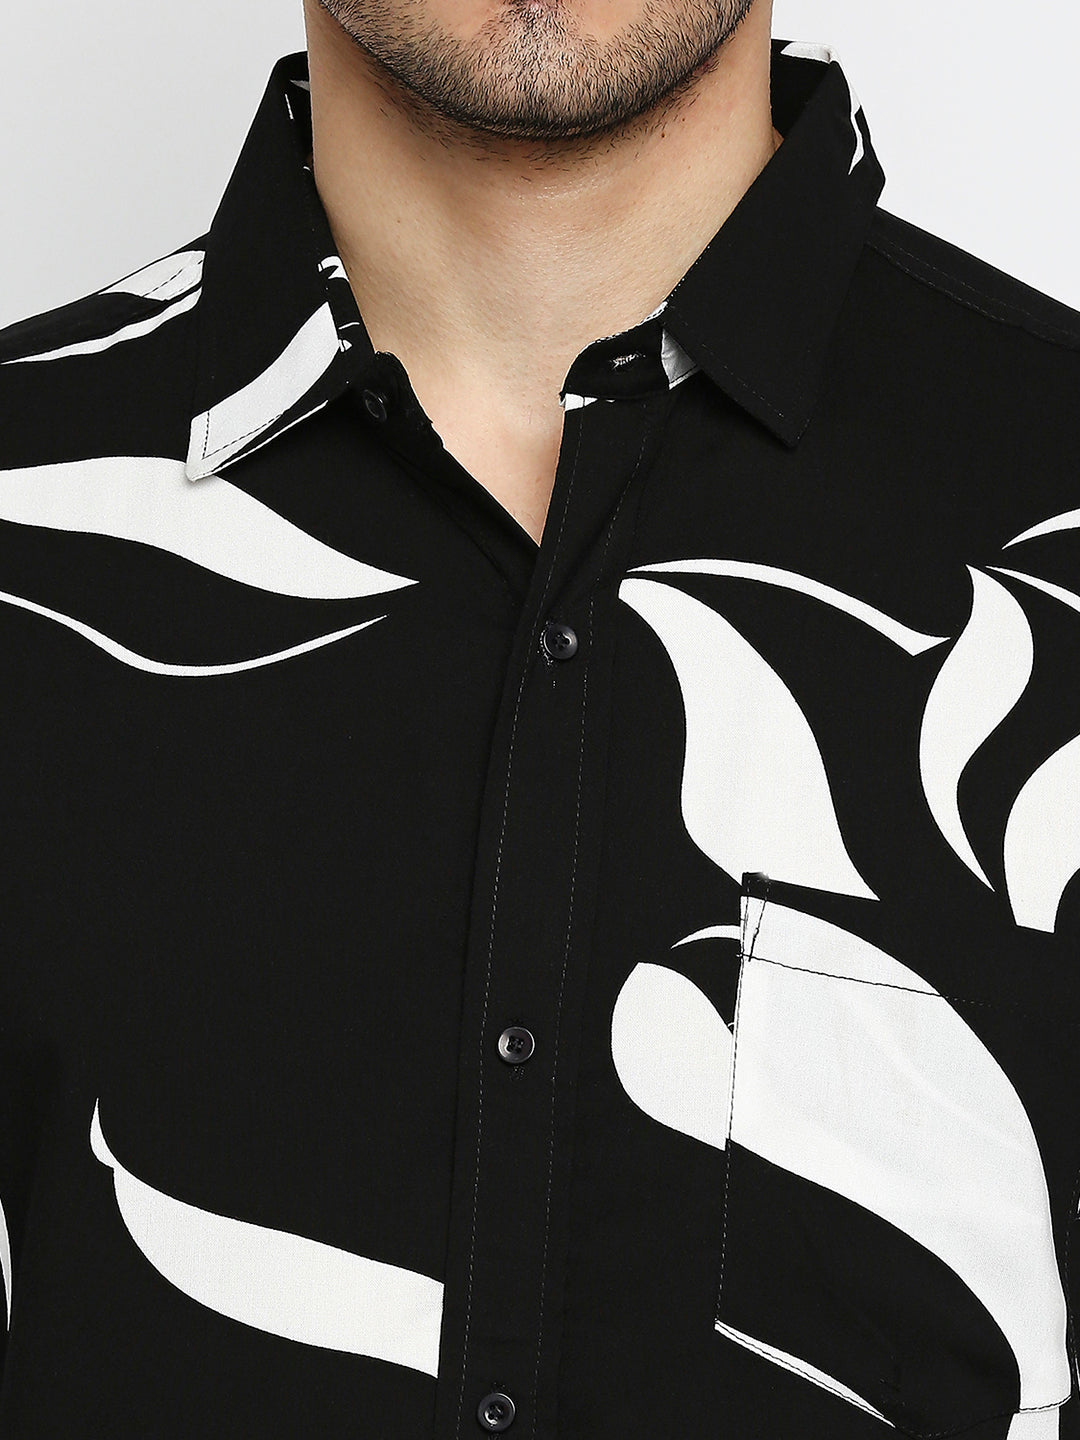 Notions Black Abstract Half Sleeve Shirt